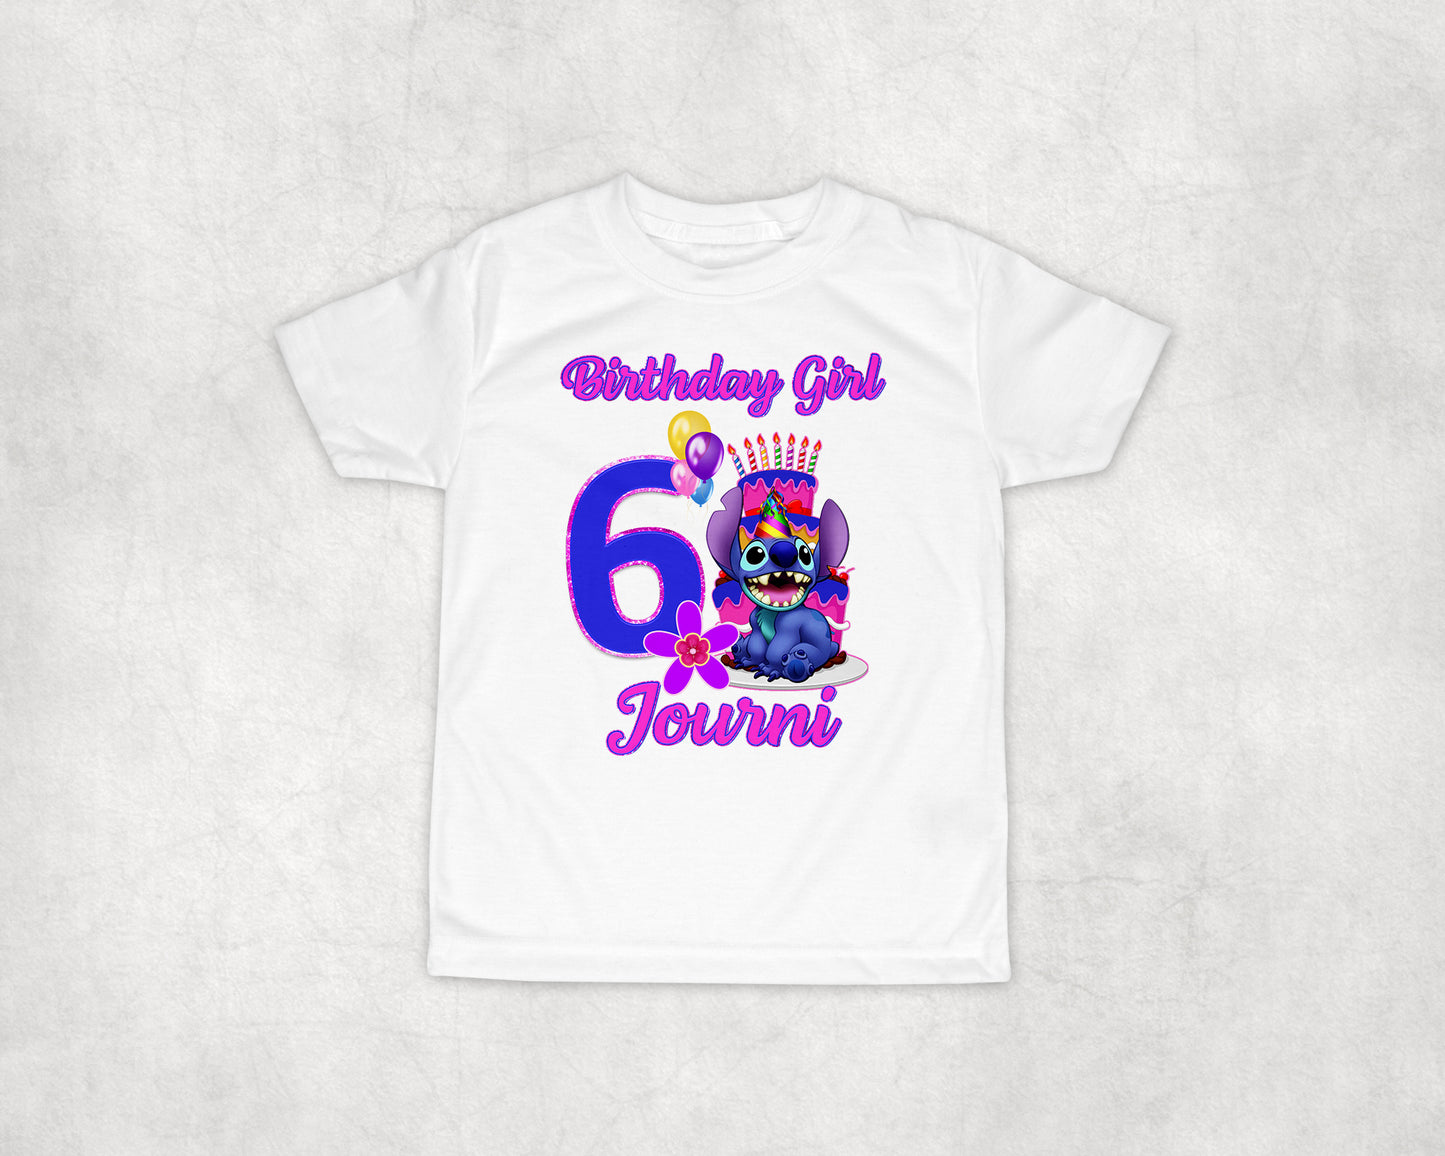 Stitch Inspired Centered Front Birthday T-Shirt